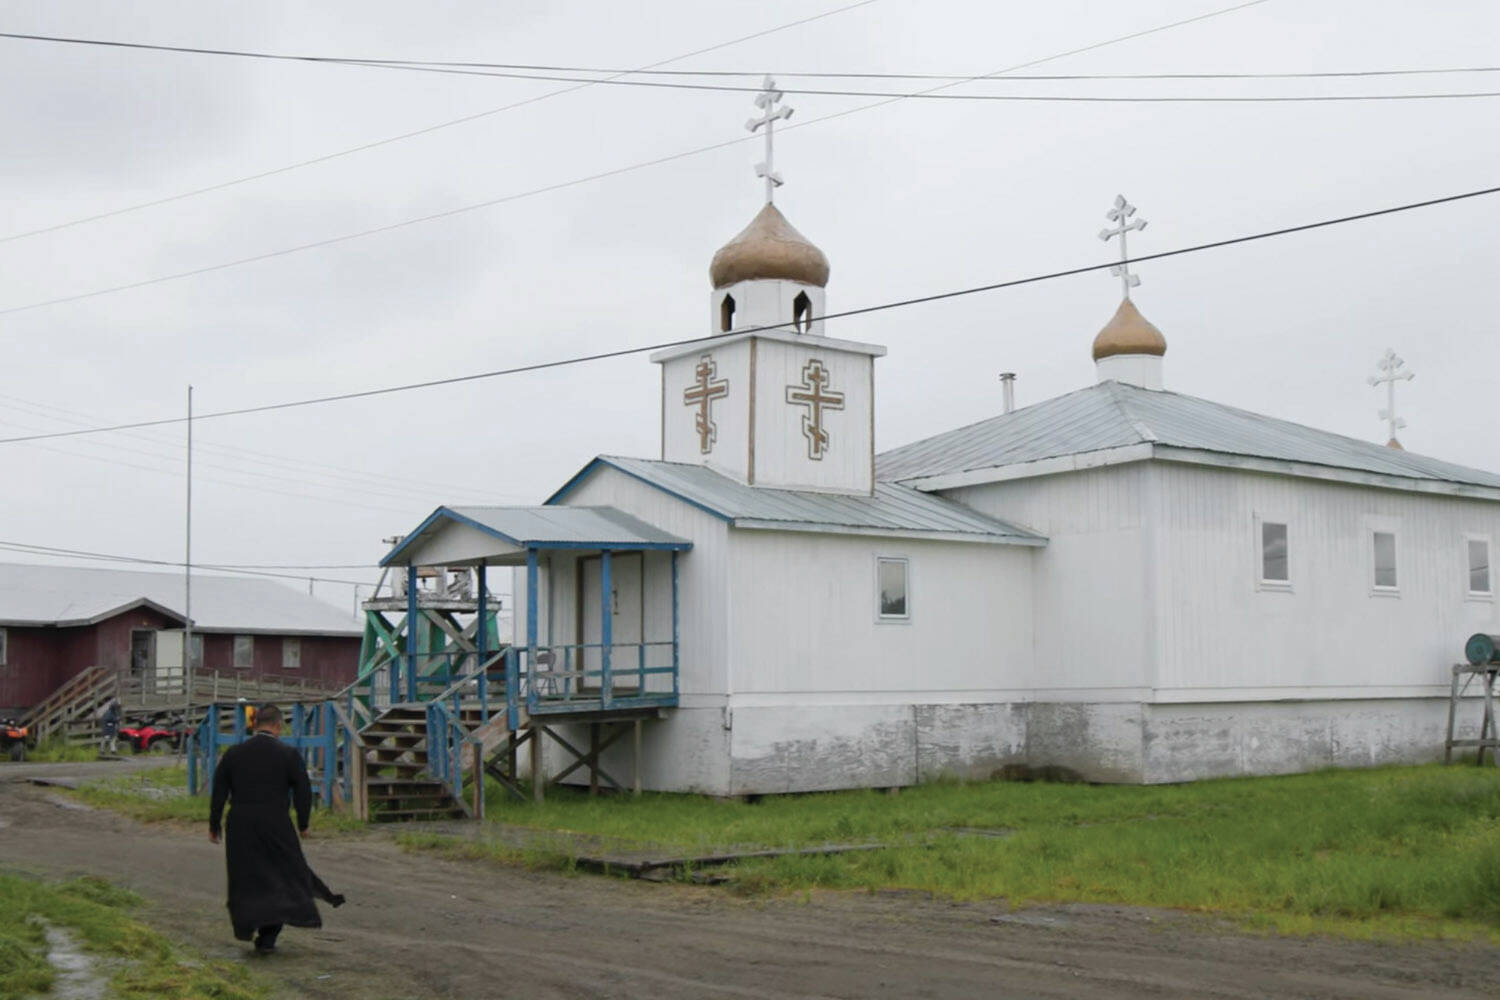 An Alaska Native man walks towards an Orthodox church in a screenshot from “Sacred Alaska.” (Promotional image courtesy Simon Scionka)